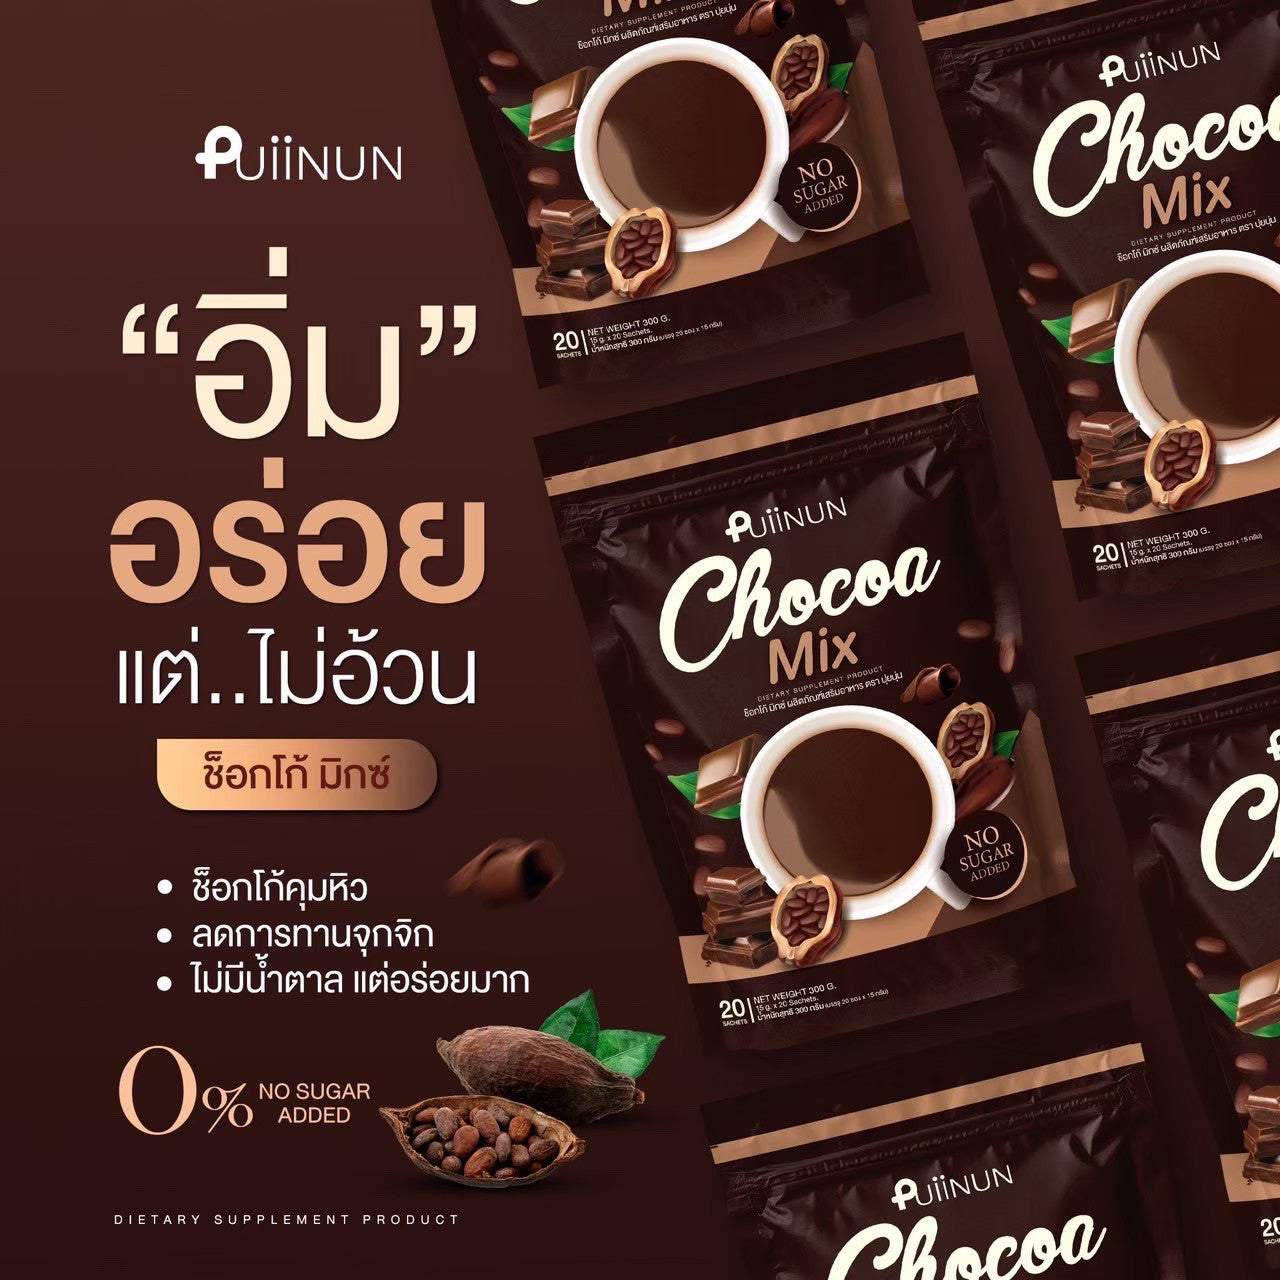 Puiinun Coffee Mix & Chocoa Mix 20 Satchels/Pack